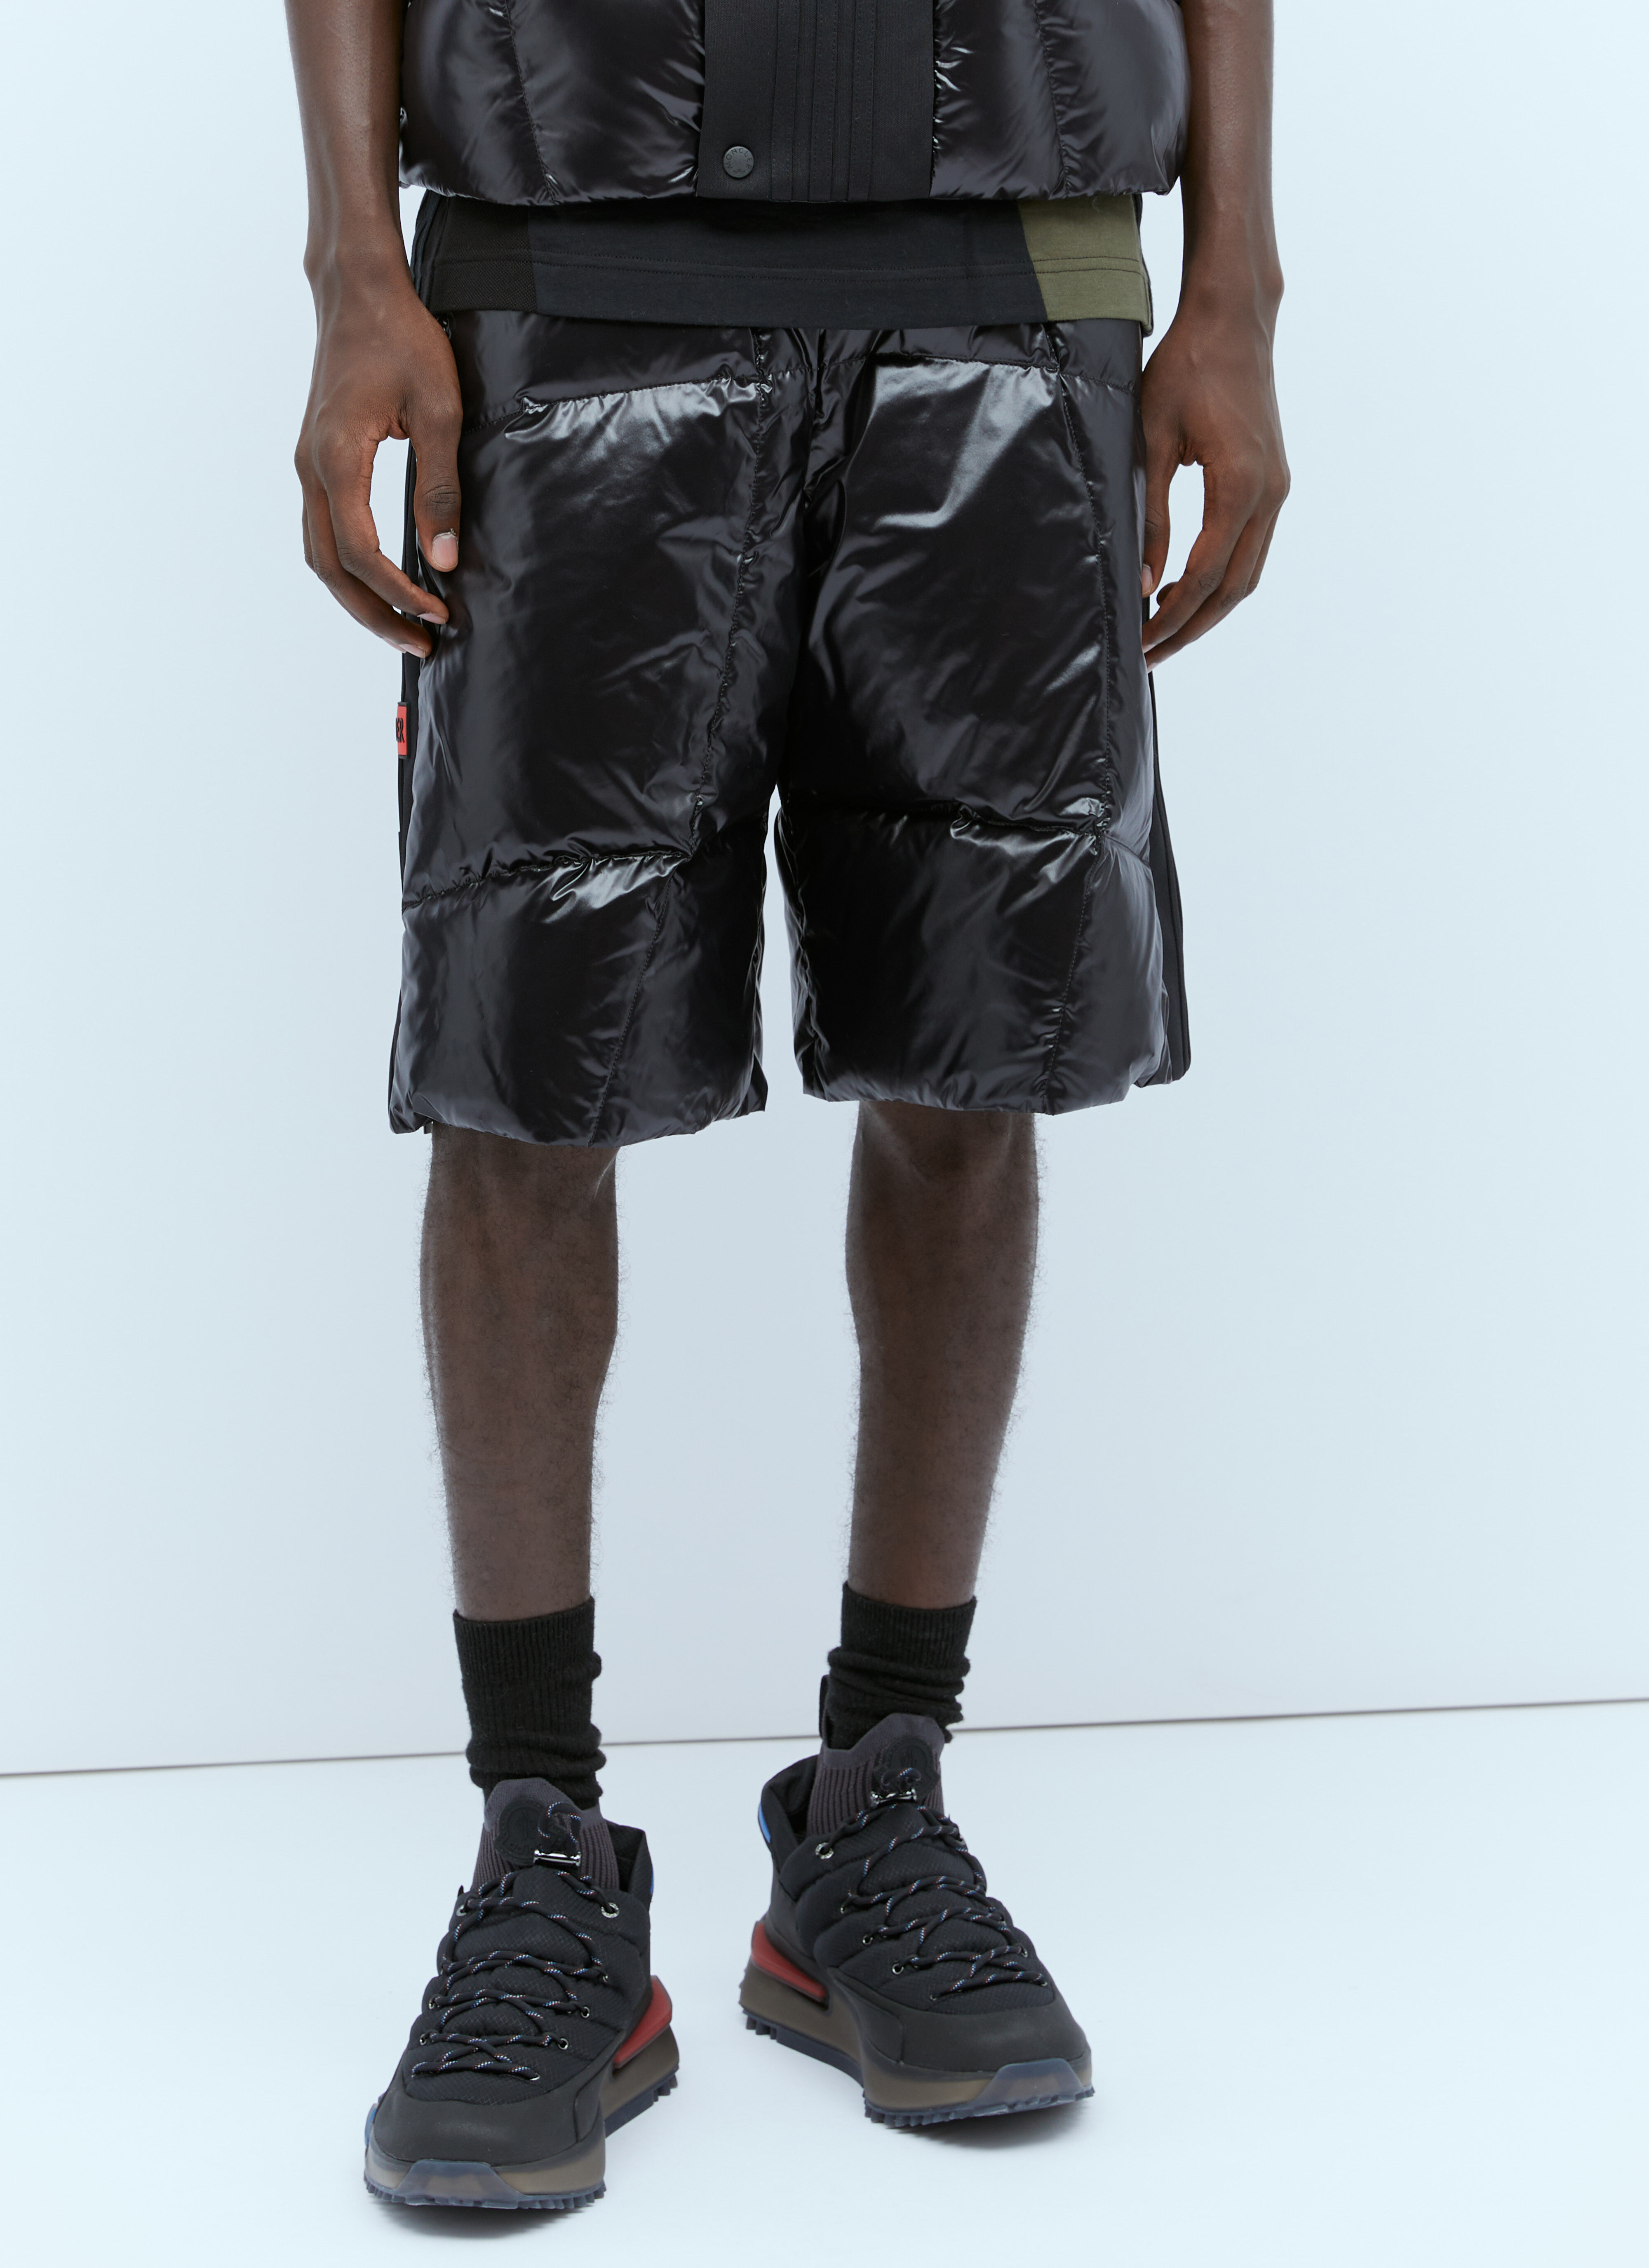 Moncler x Roc Nation designed by Jay-Z 羽绒运动短裤 黑色 mrn0156002